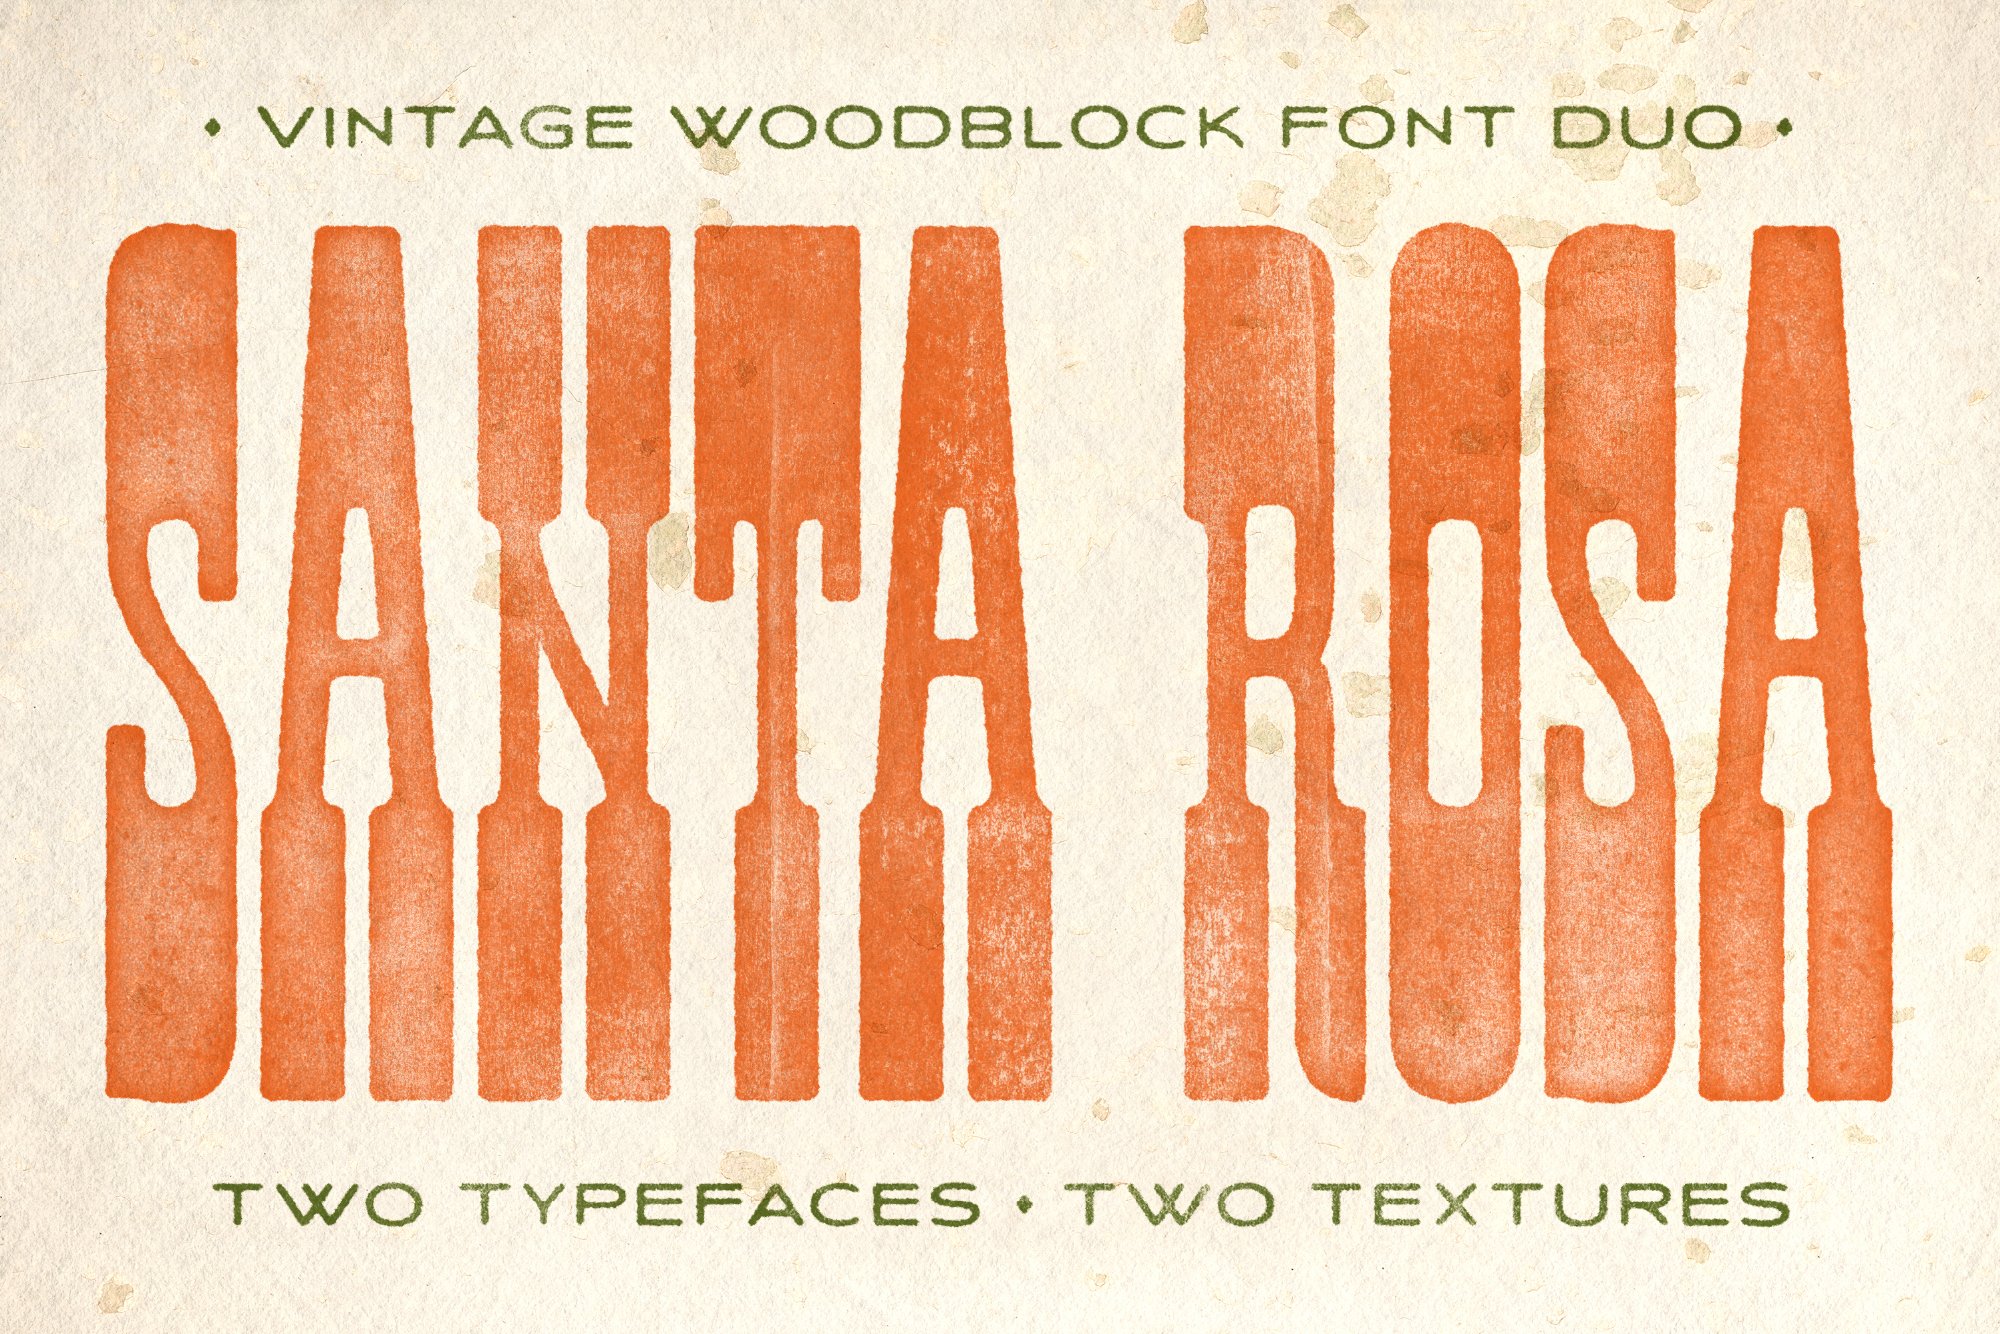 Santa Rosa Vintage Font Duo cover image.